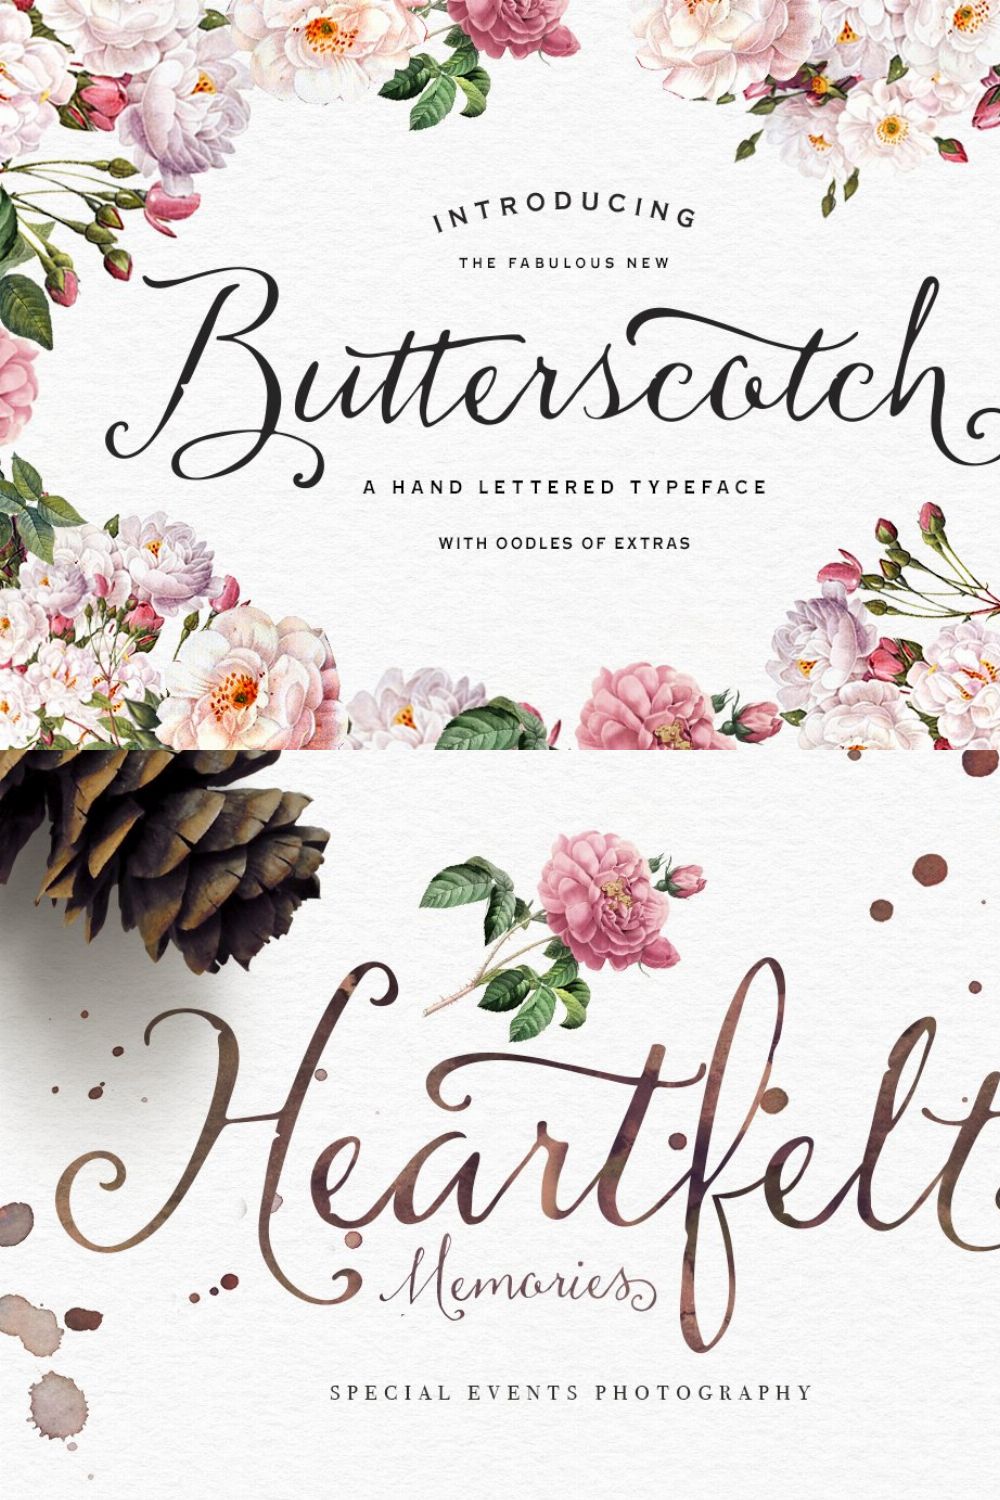 Butterscotch Typeface pinterest preview image.